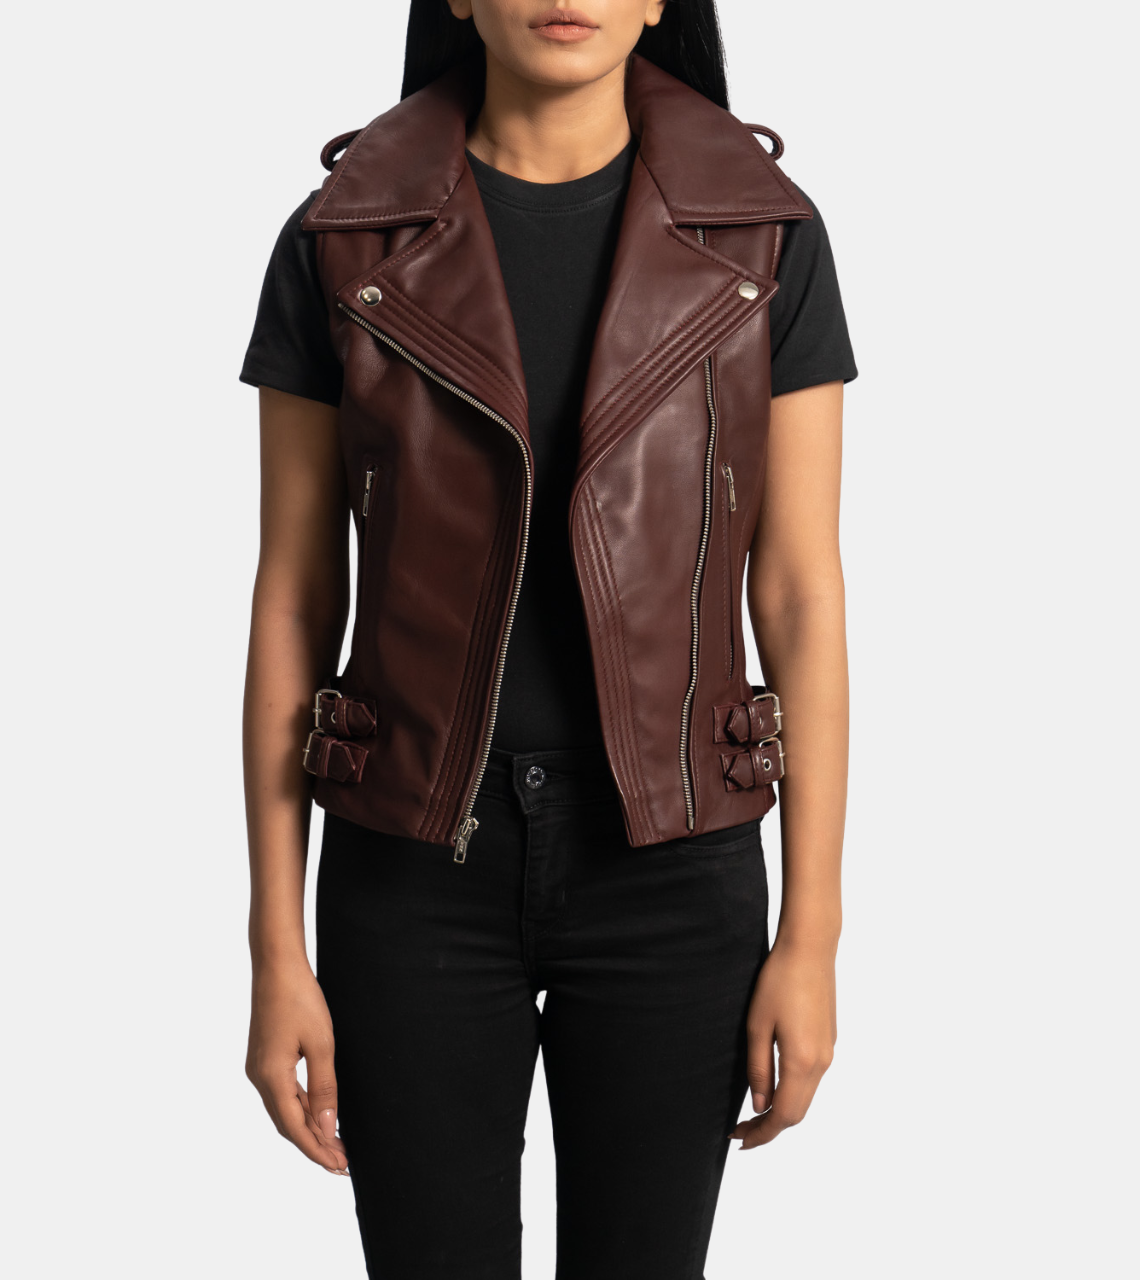 Airelle Women's Brown Biker's Leather Vest